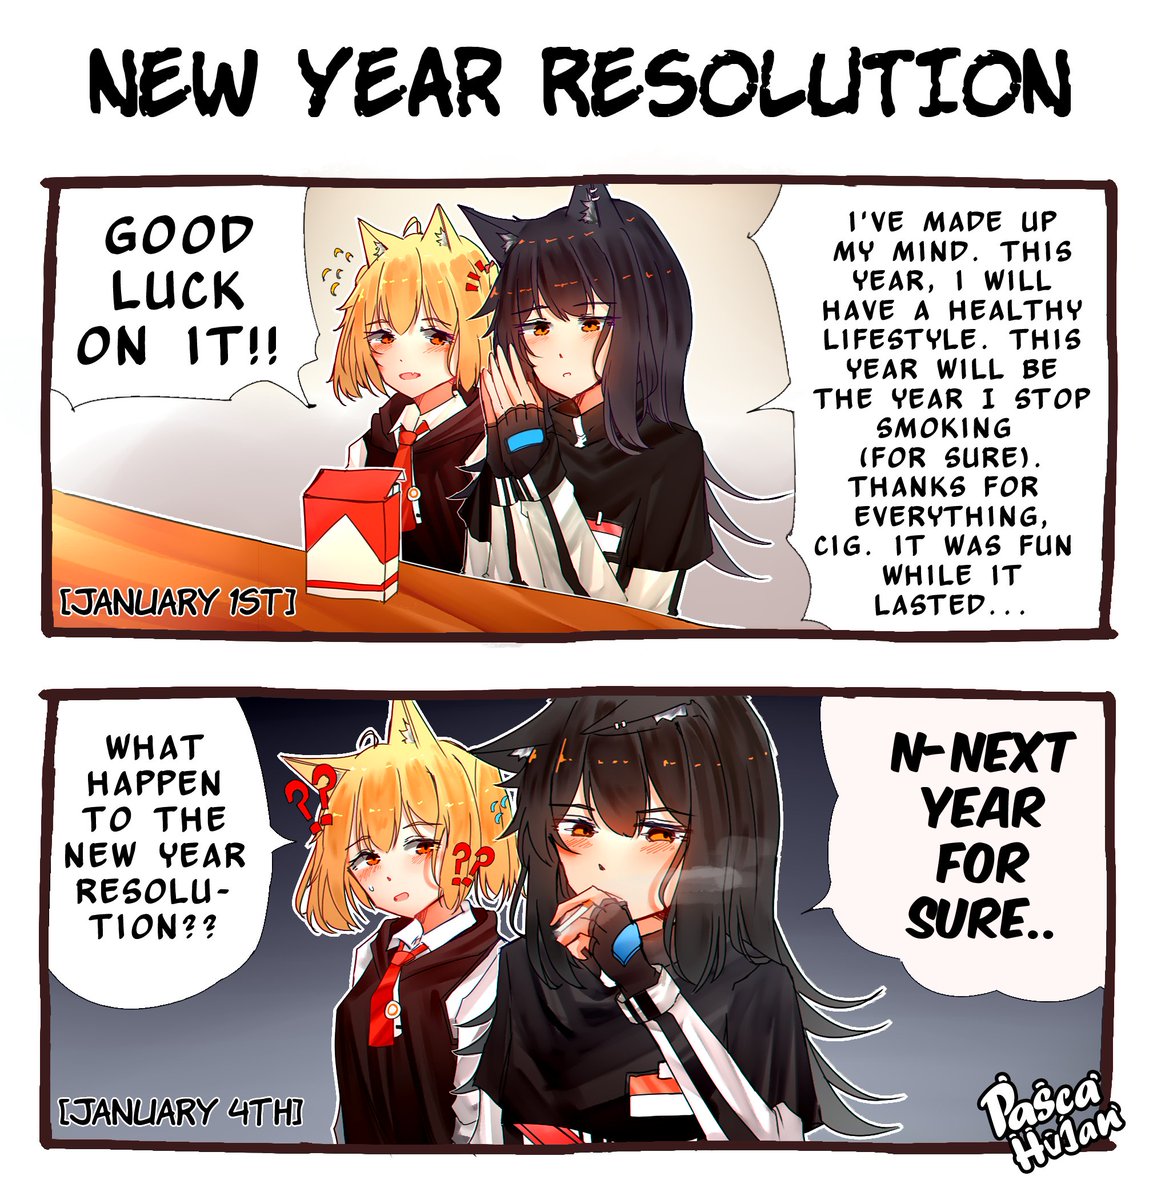 New Year Resolution
---
#明日方舟 #アークナイツ #명일방주 #Arknights 